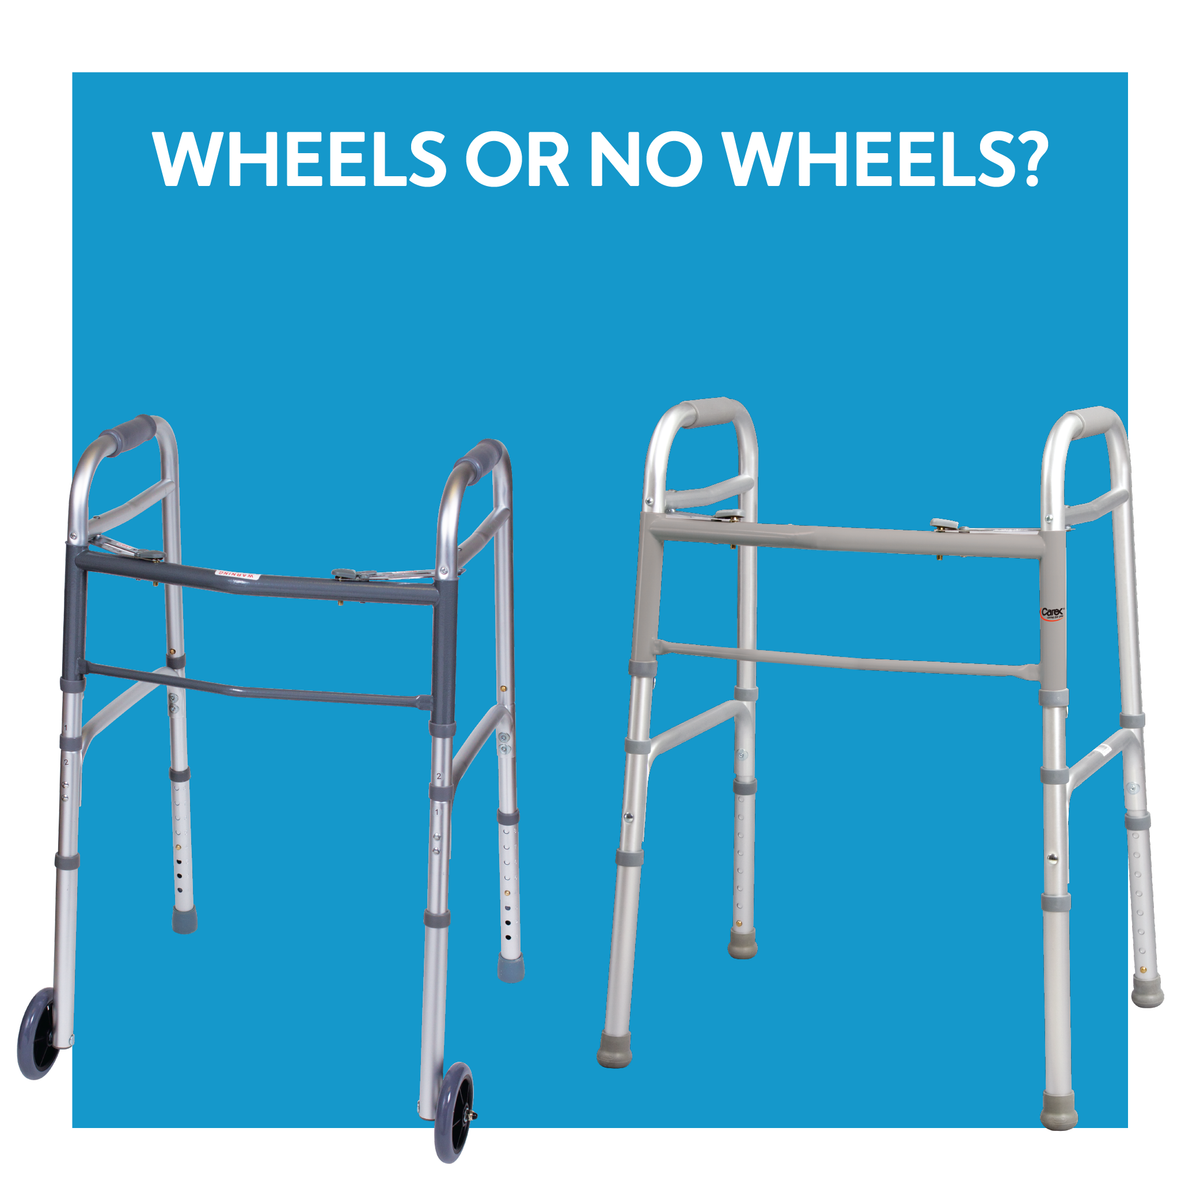 Wheels or no wheels